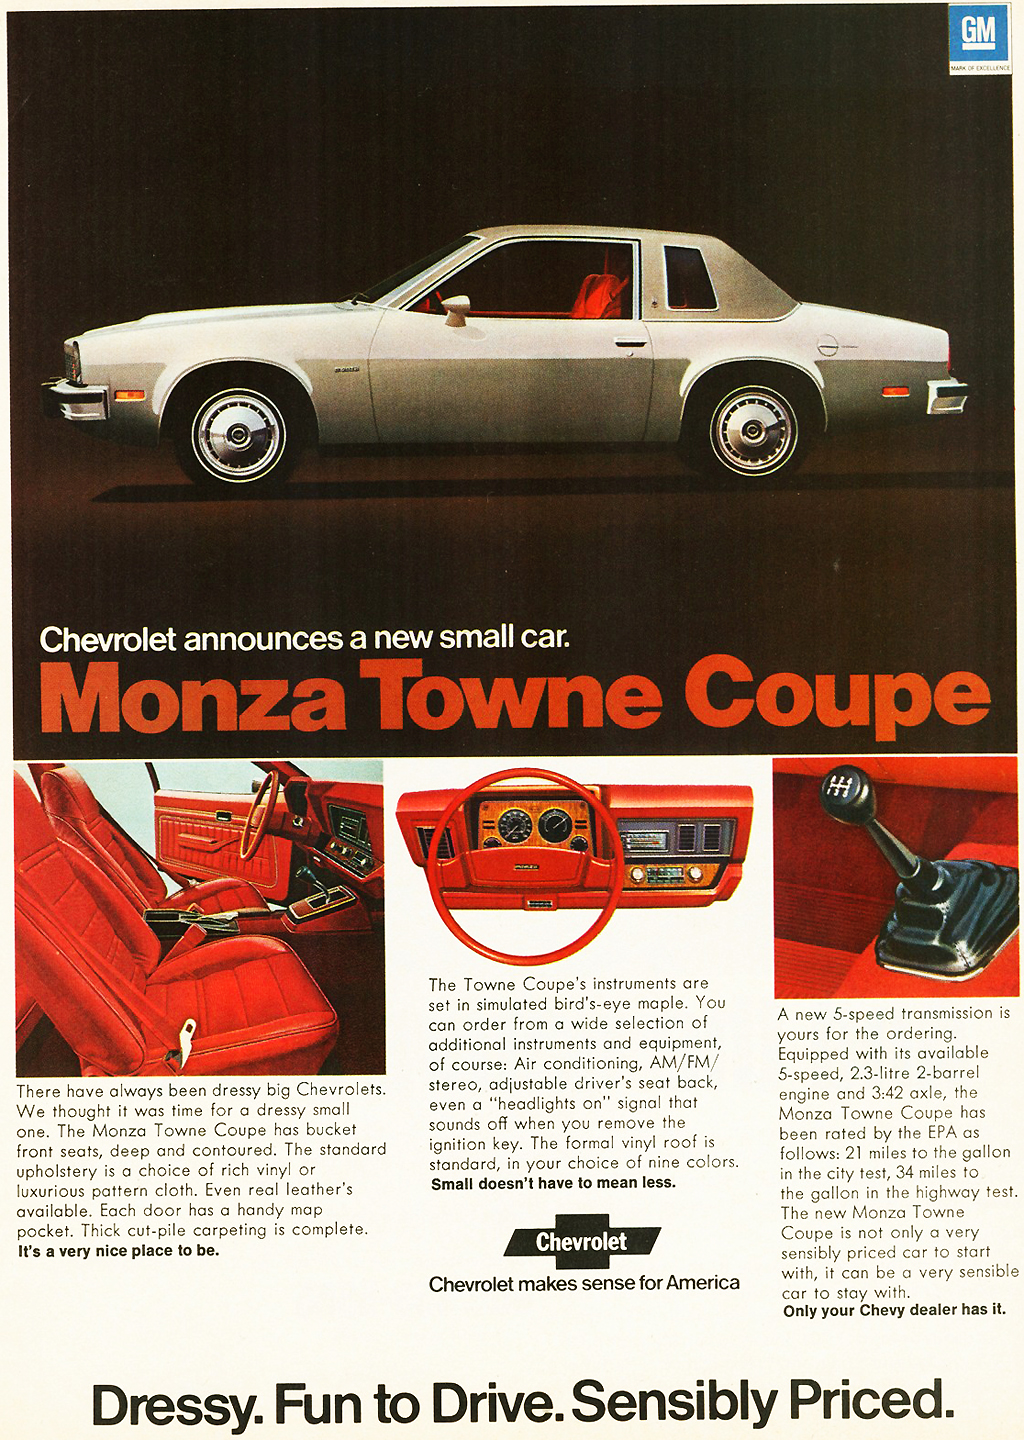 1975 Chevrolet Monza Towne Coupe